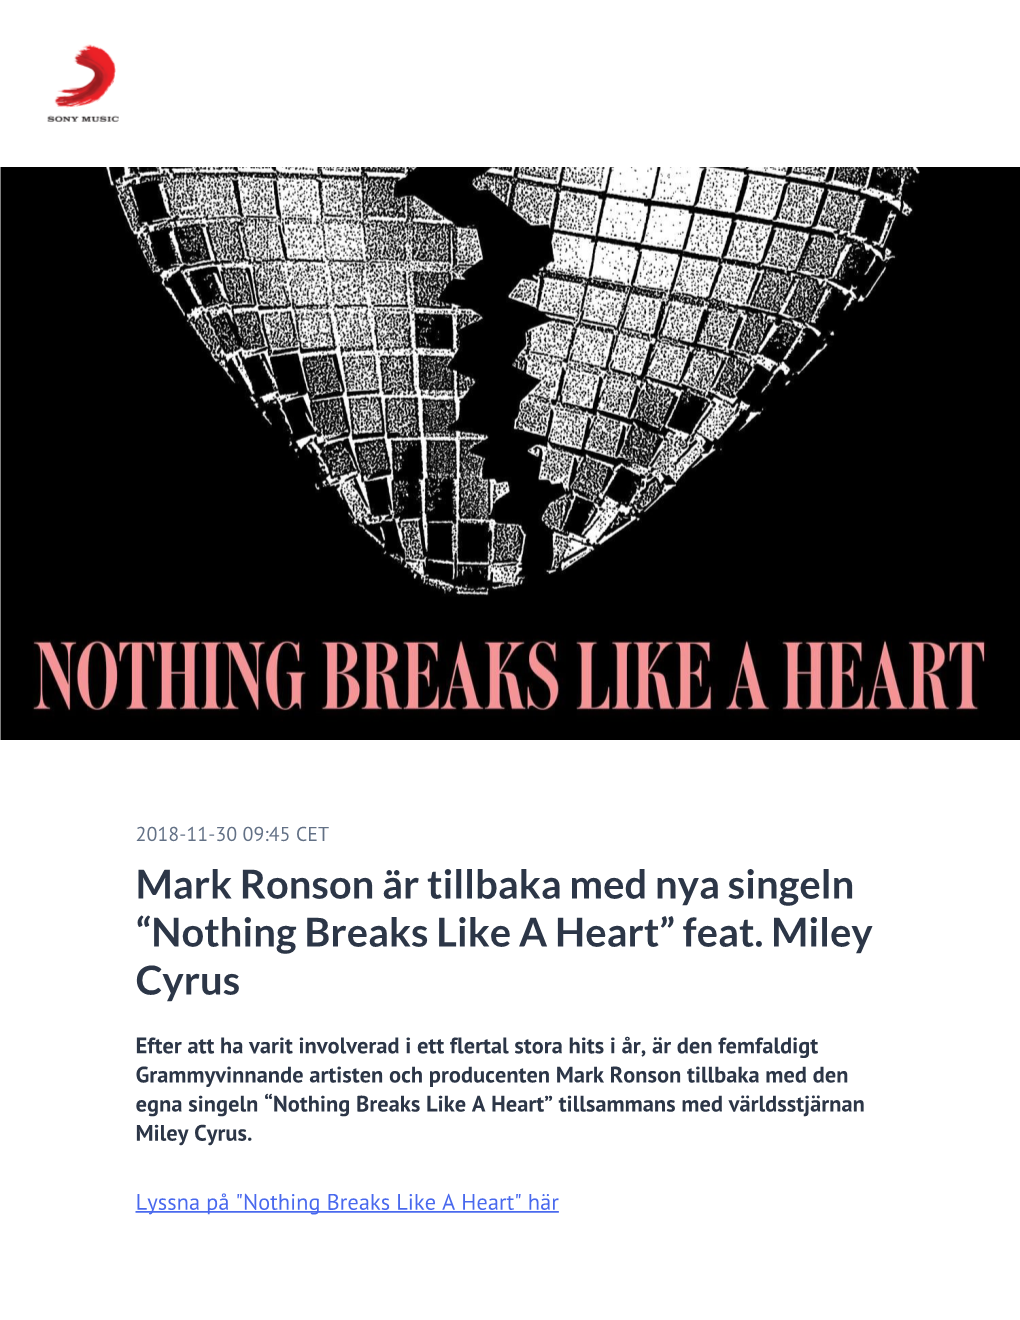 “Nothing Breaks Like a Heart” Feat. Miley Cyrus